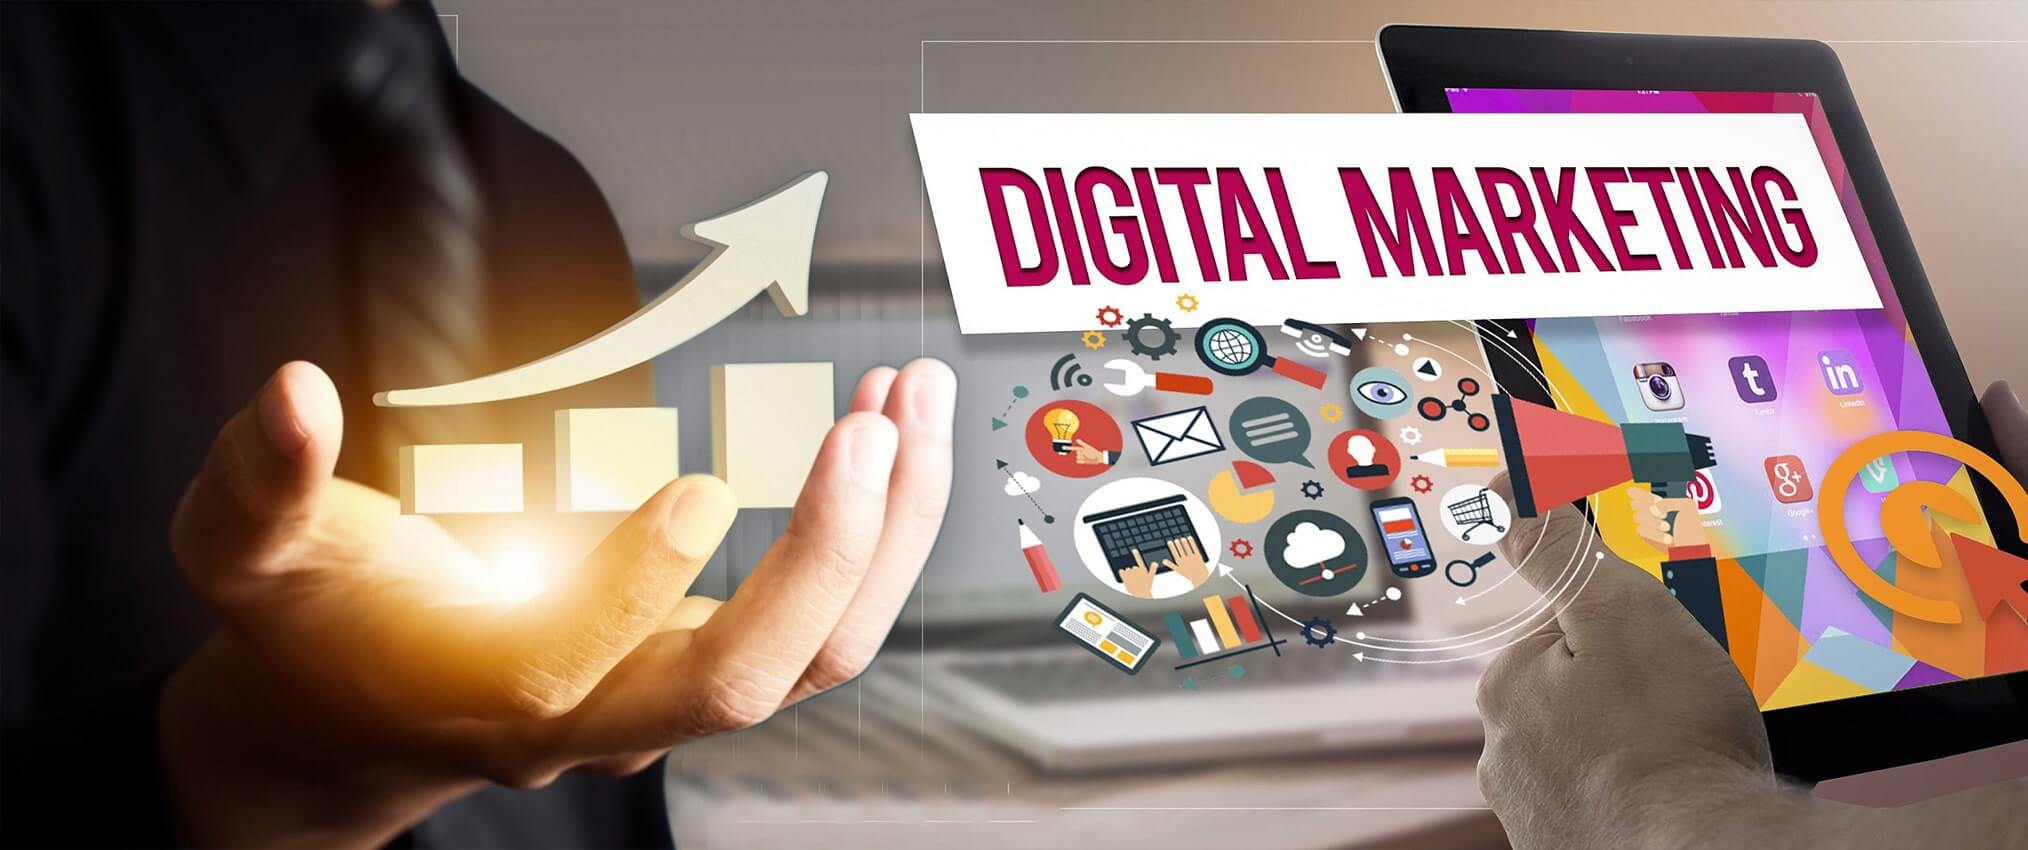 Digital marketing Essentials in 2021 And Beyond